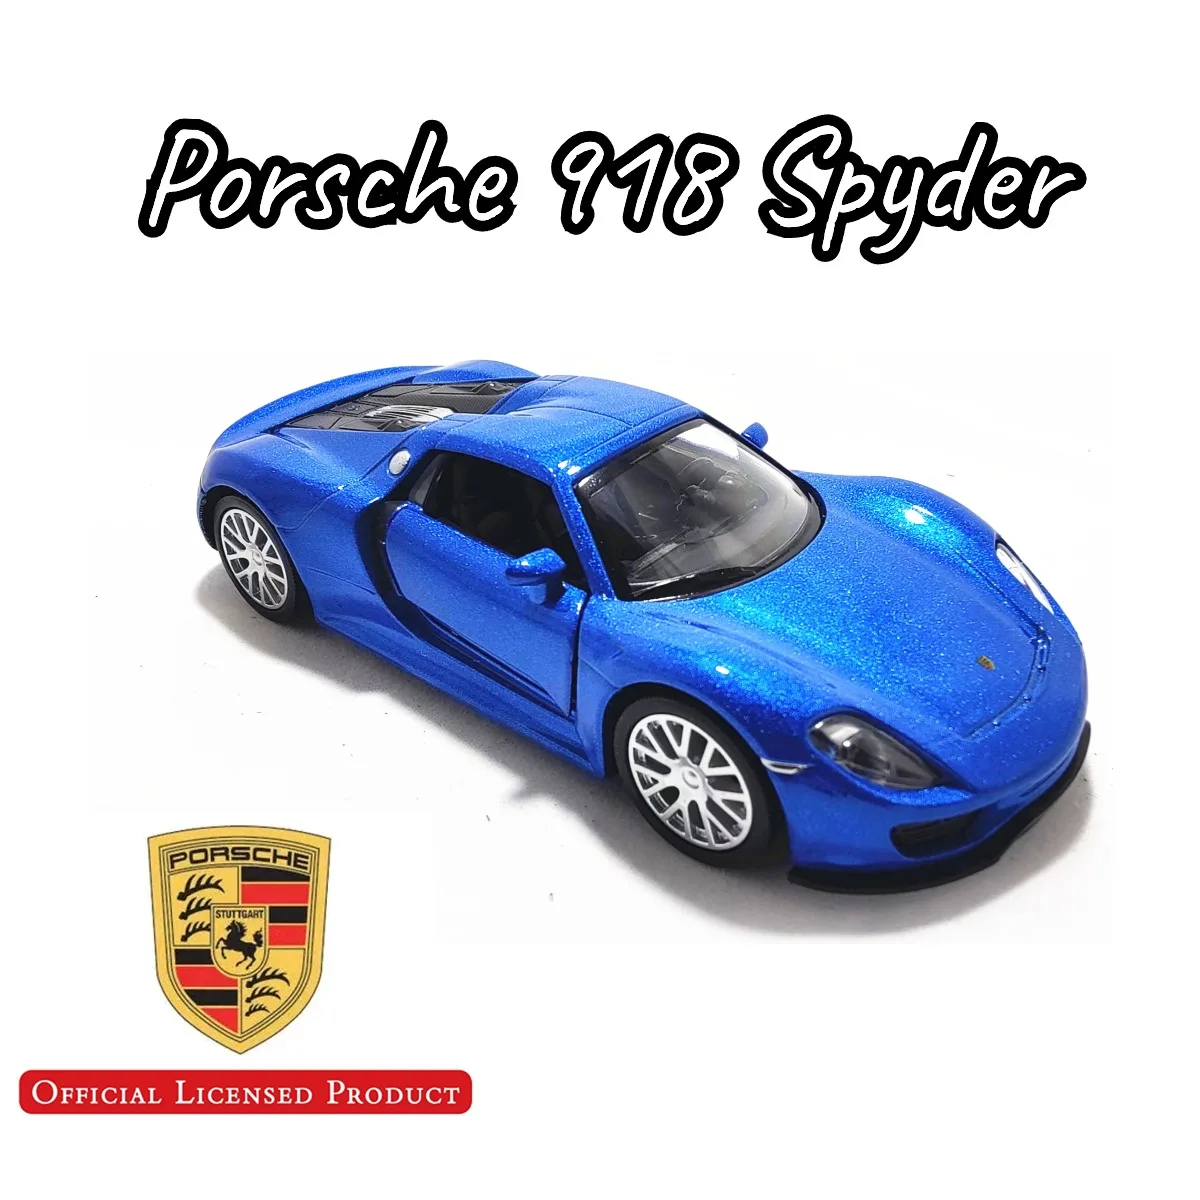 

1:36 Scale Porsche 918 Spyder 911 Car Model Replica Diecast Vehicle Miniature Home Office Interior Decor Xmas Gift Kid Boy Toy